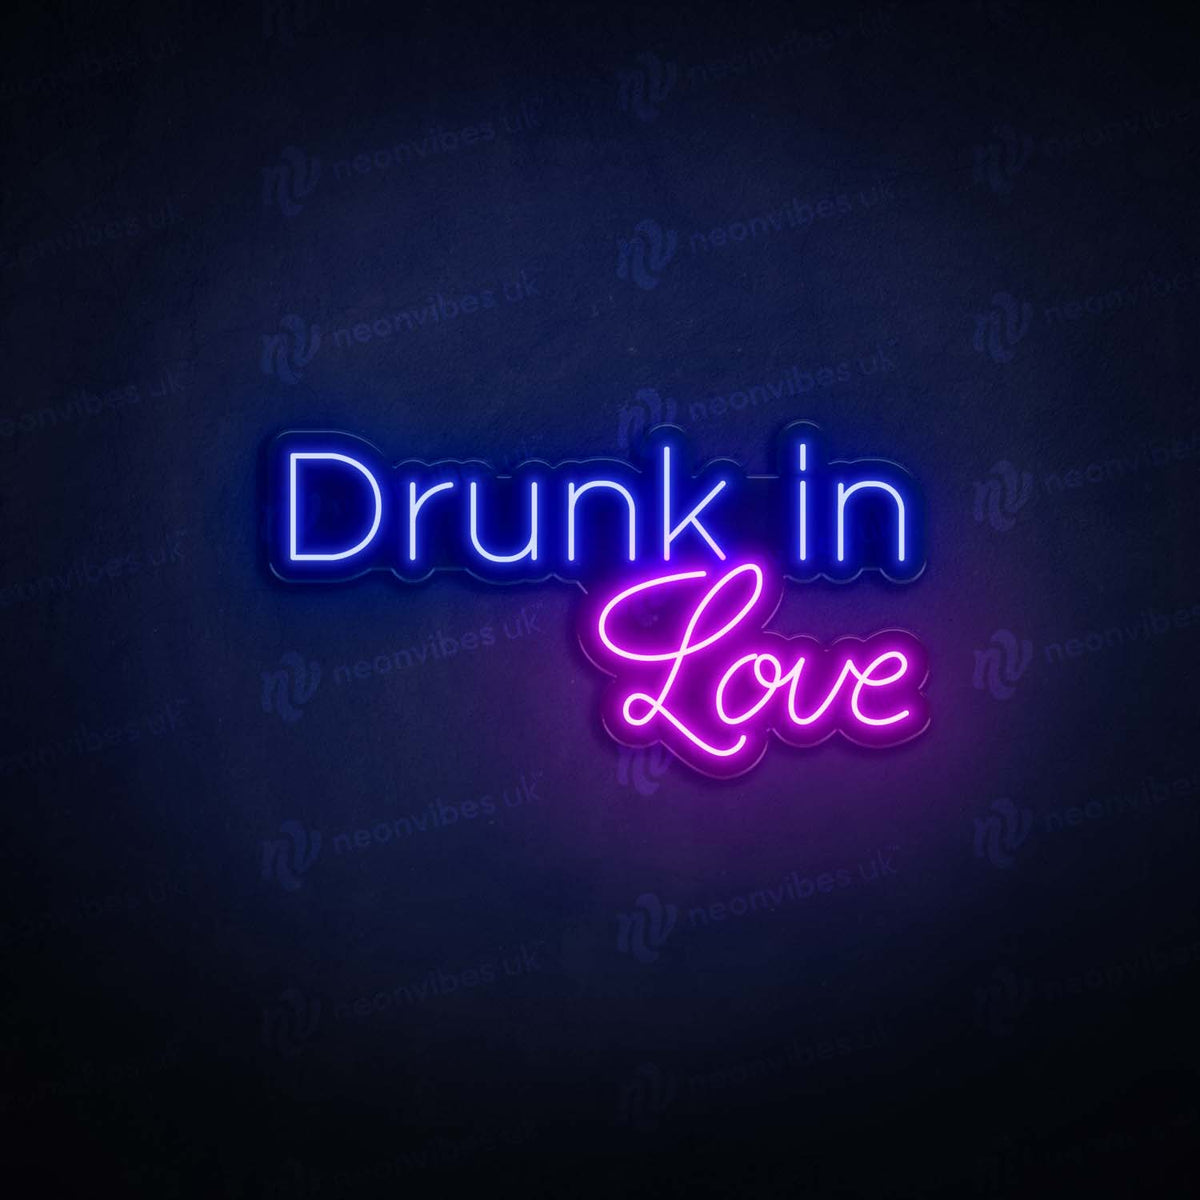 Drunk In Love neon sign